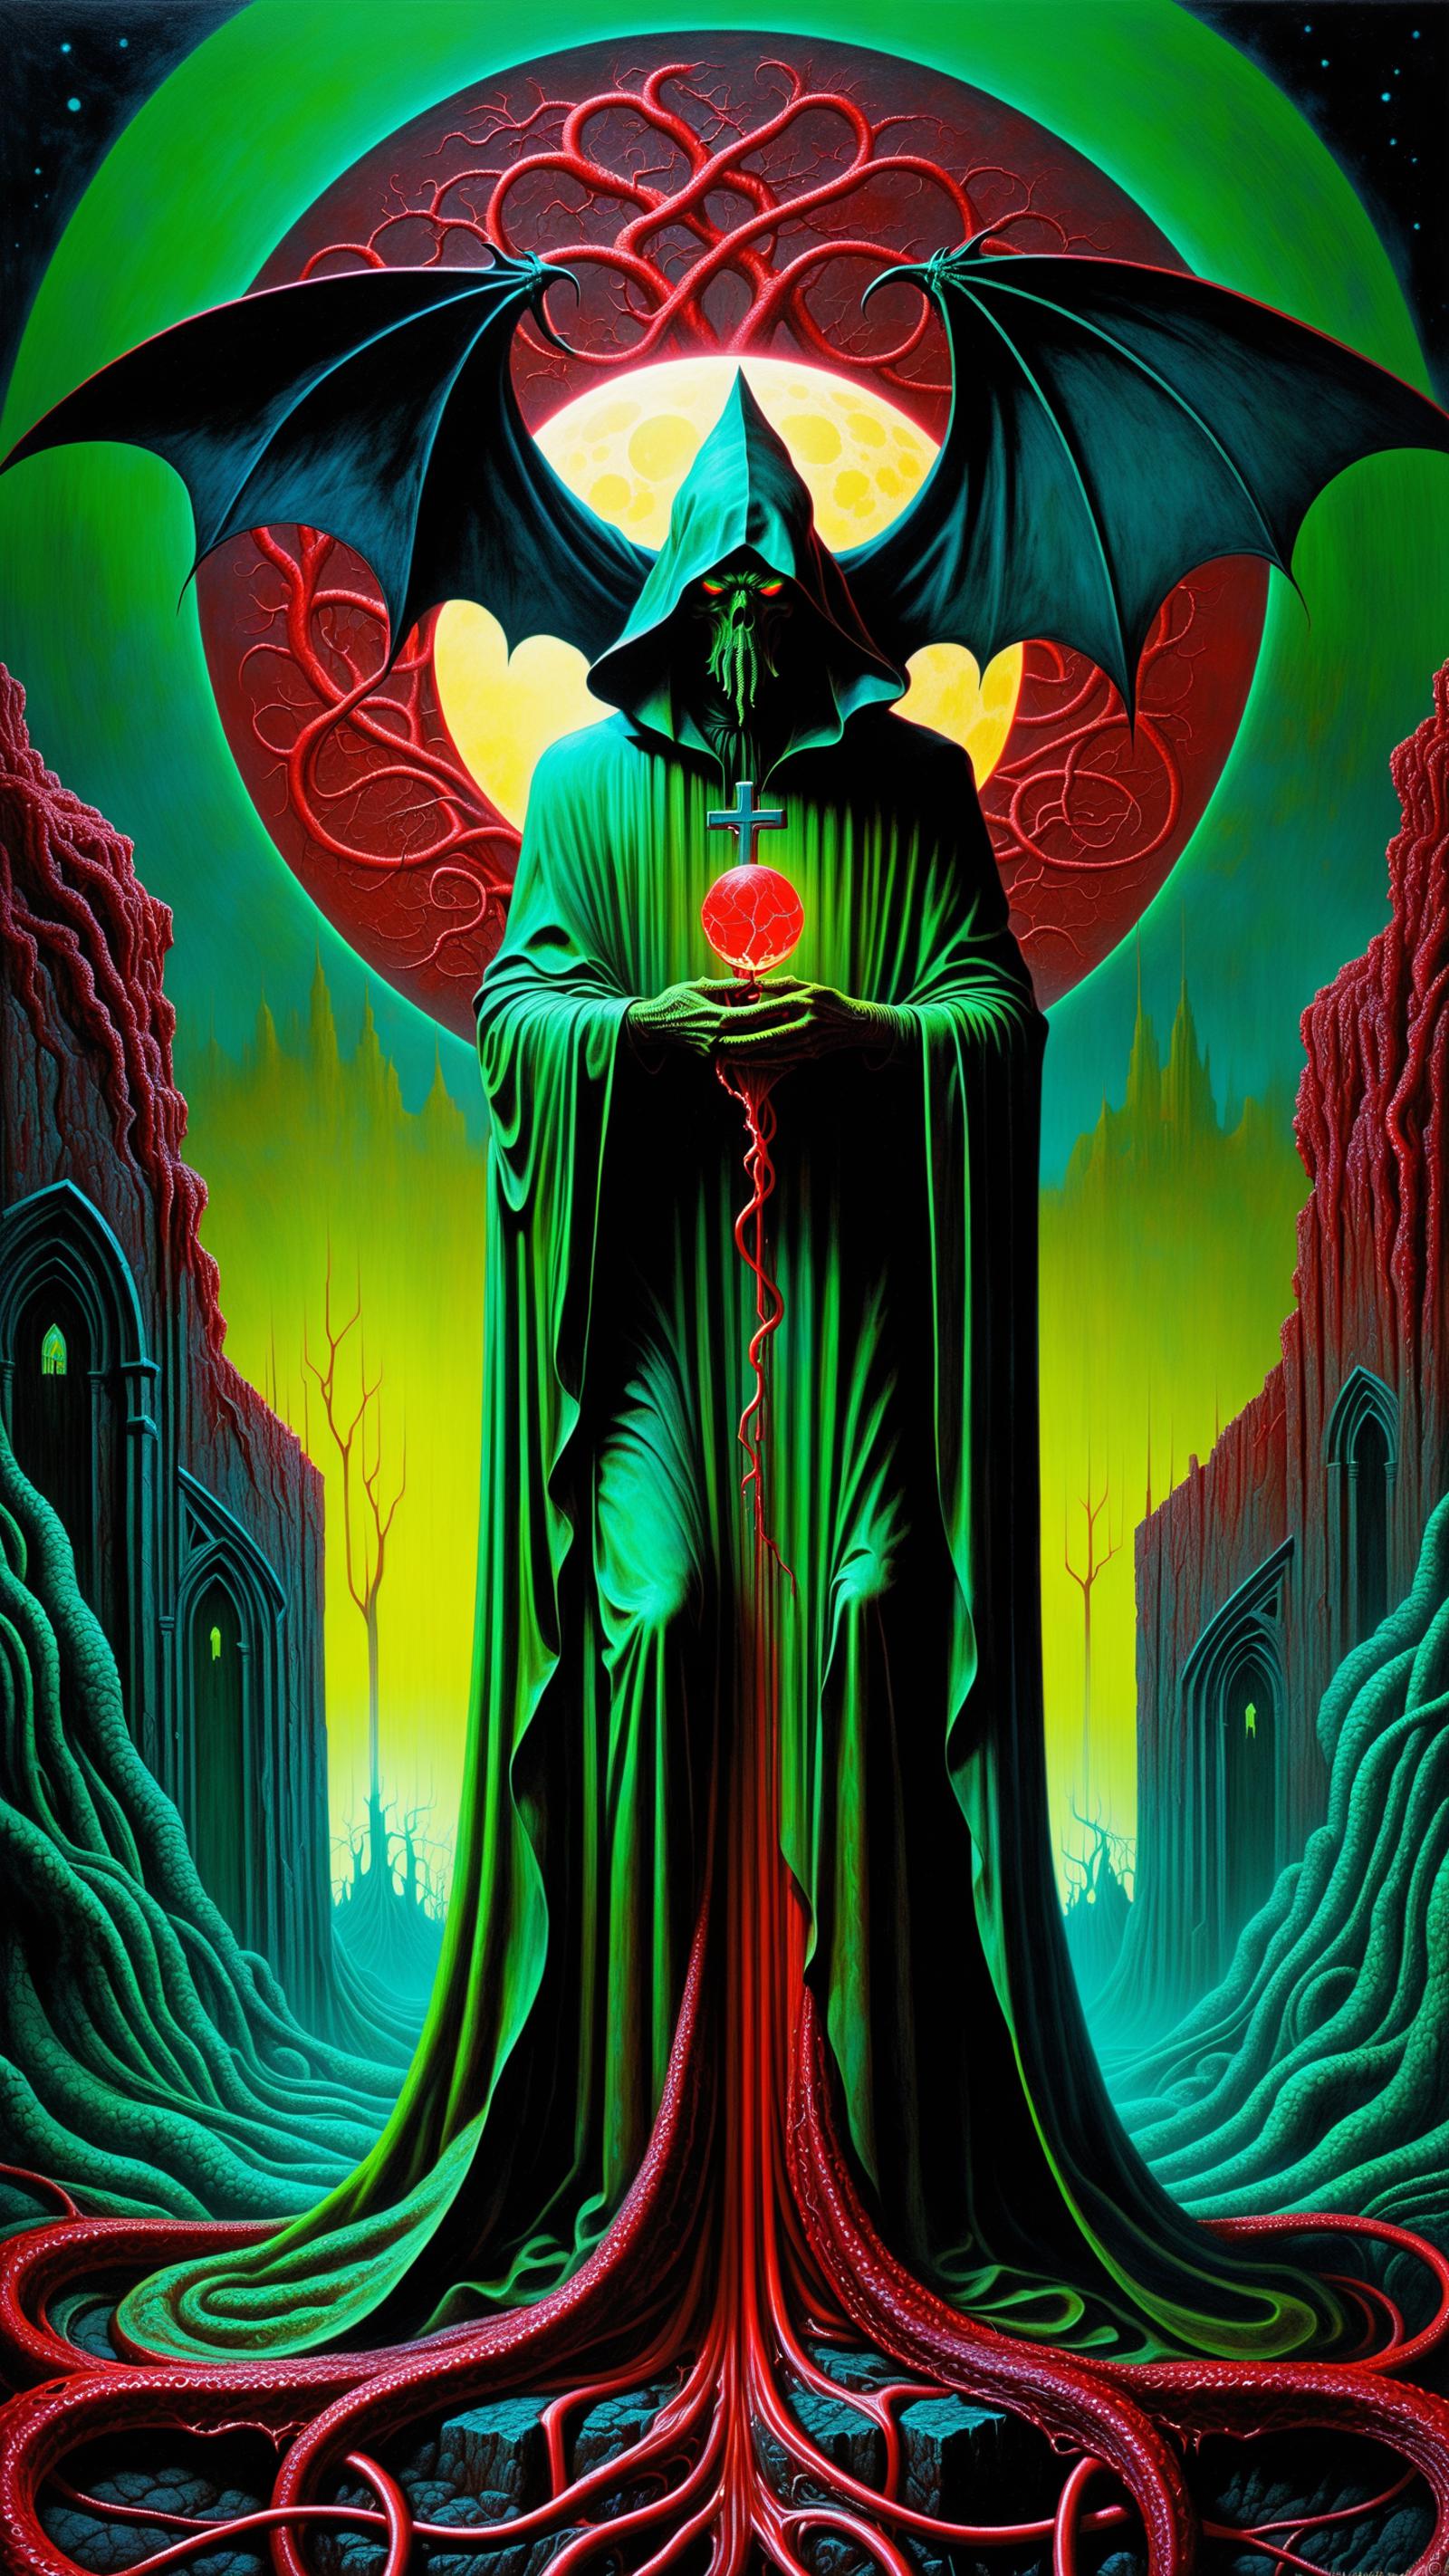 A Dark Fantasy Artwork Featuring a Demon Holding a Heart